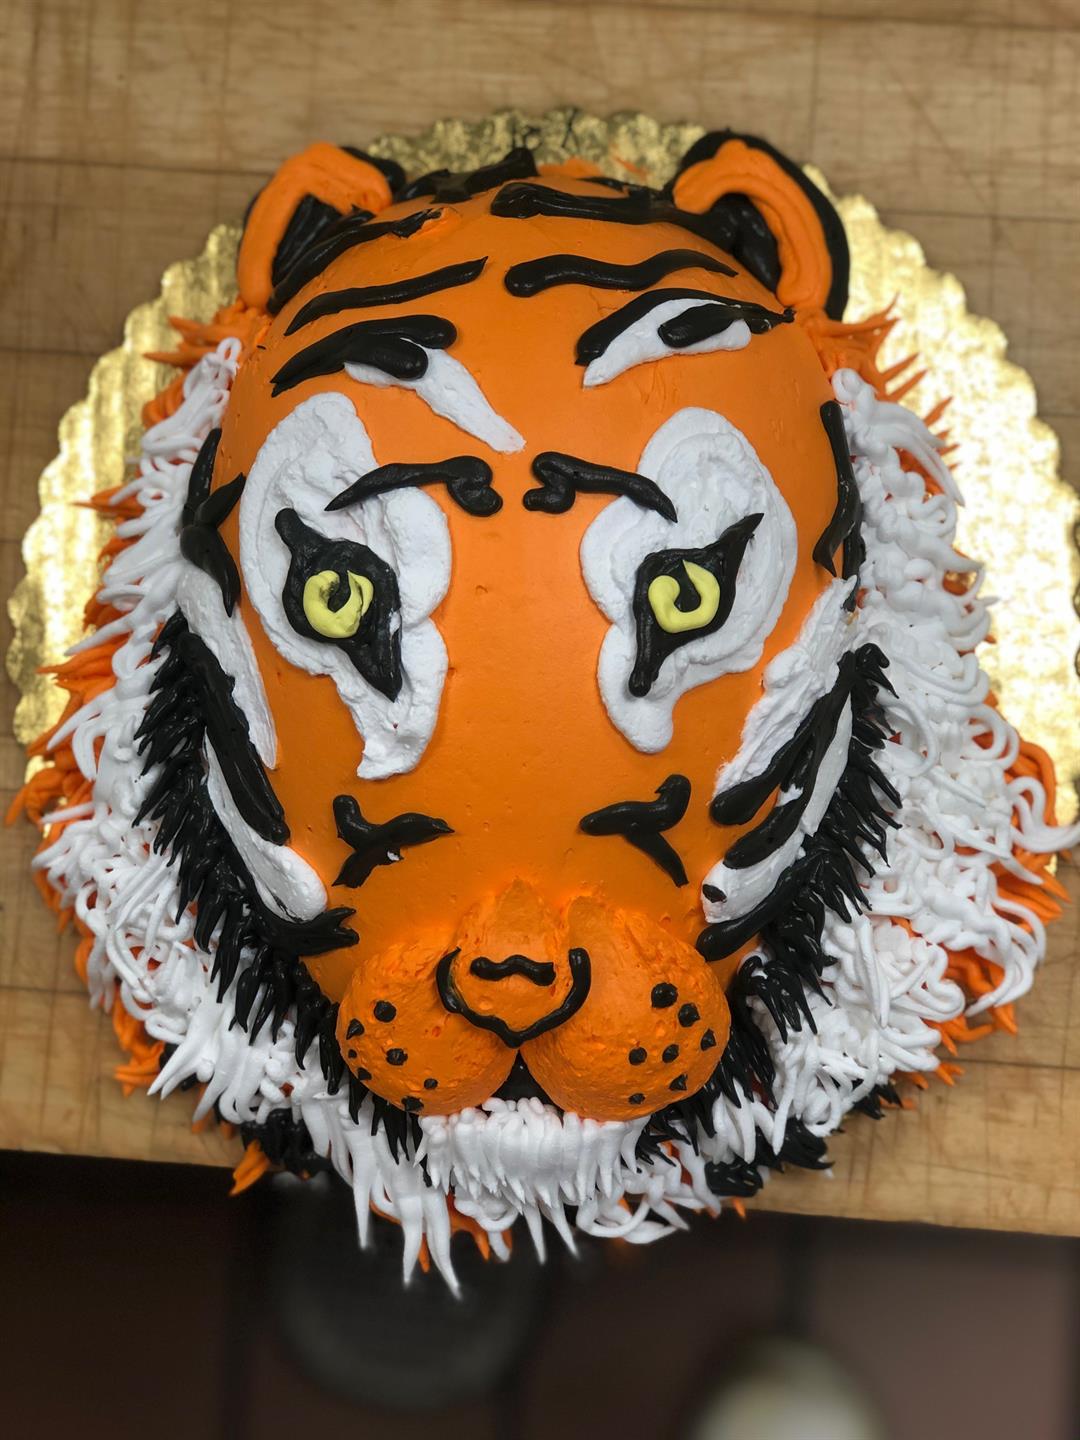 Tiger Face Cake - Decorated Cake by MsTreatz - CakesDecor